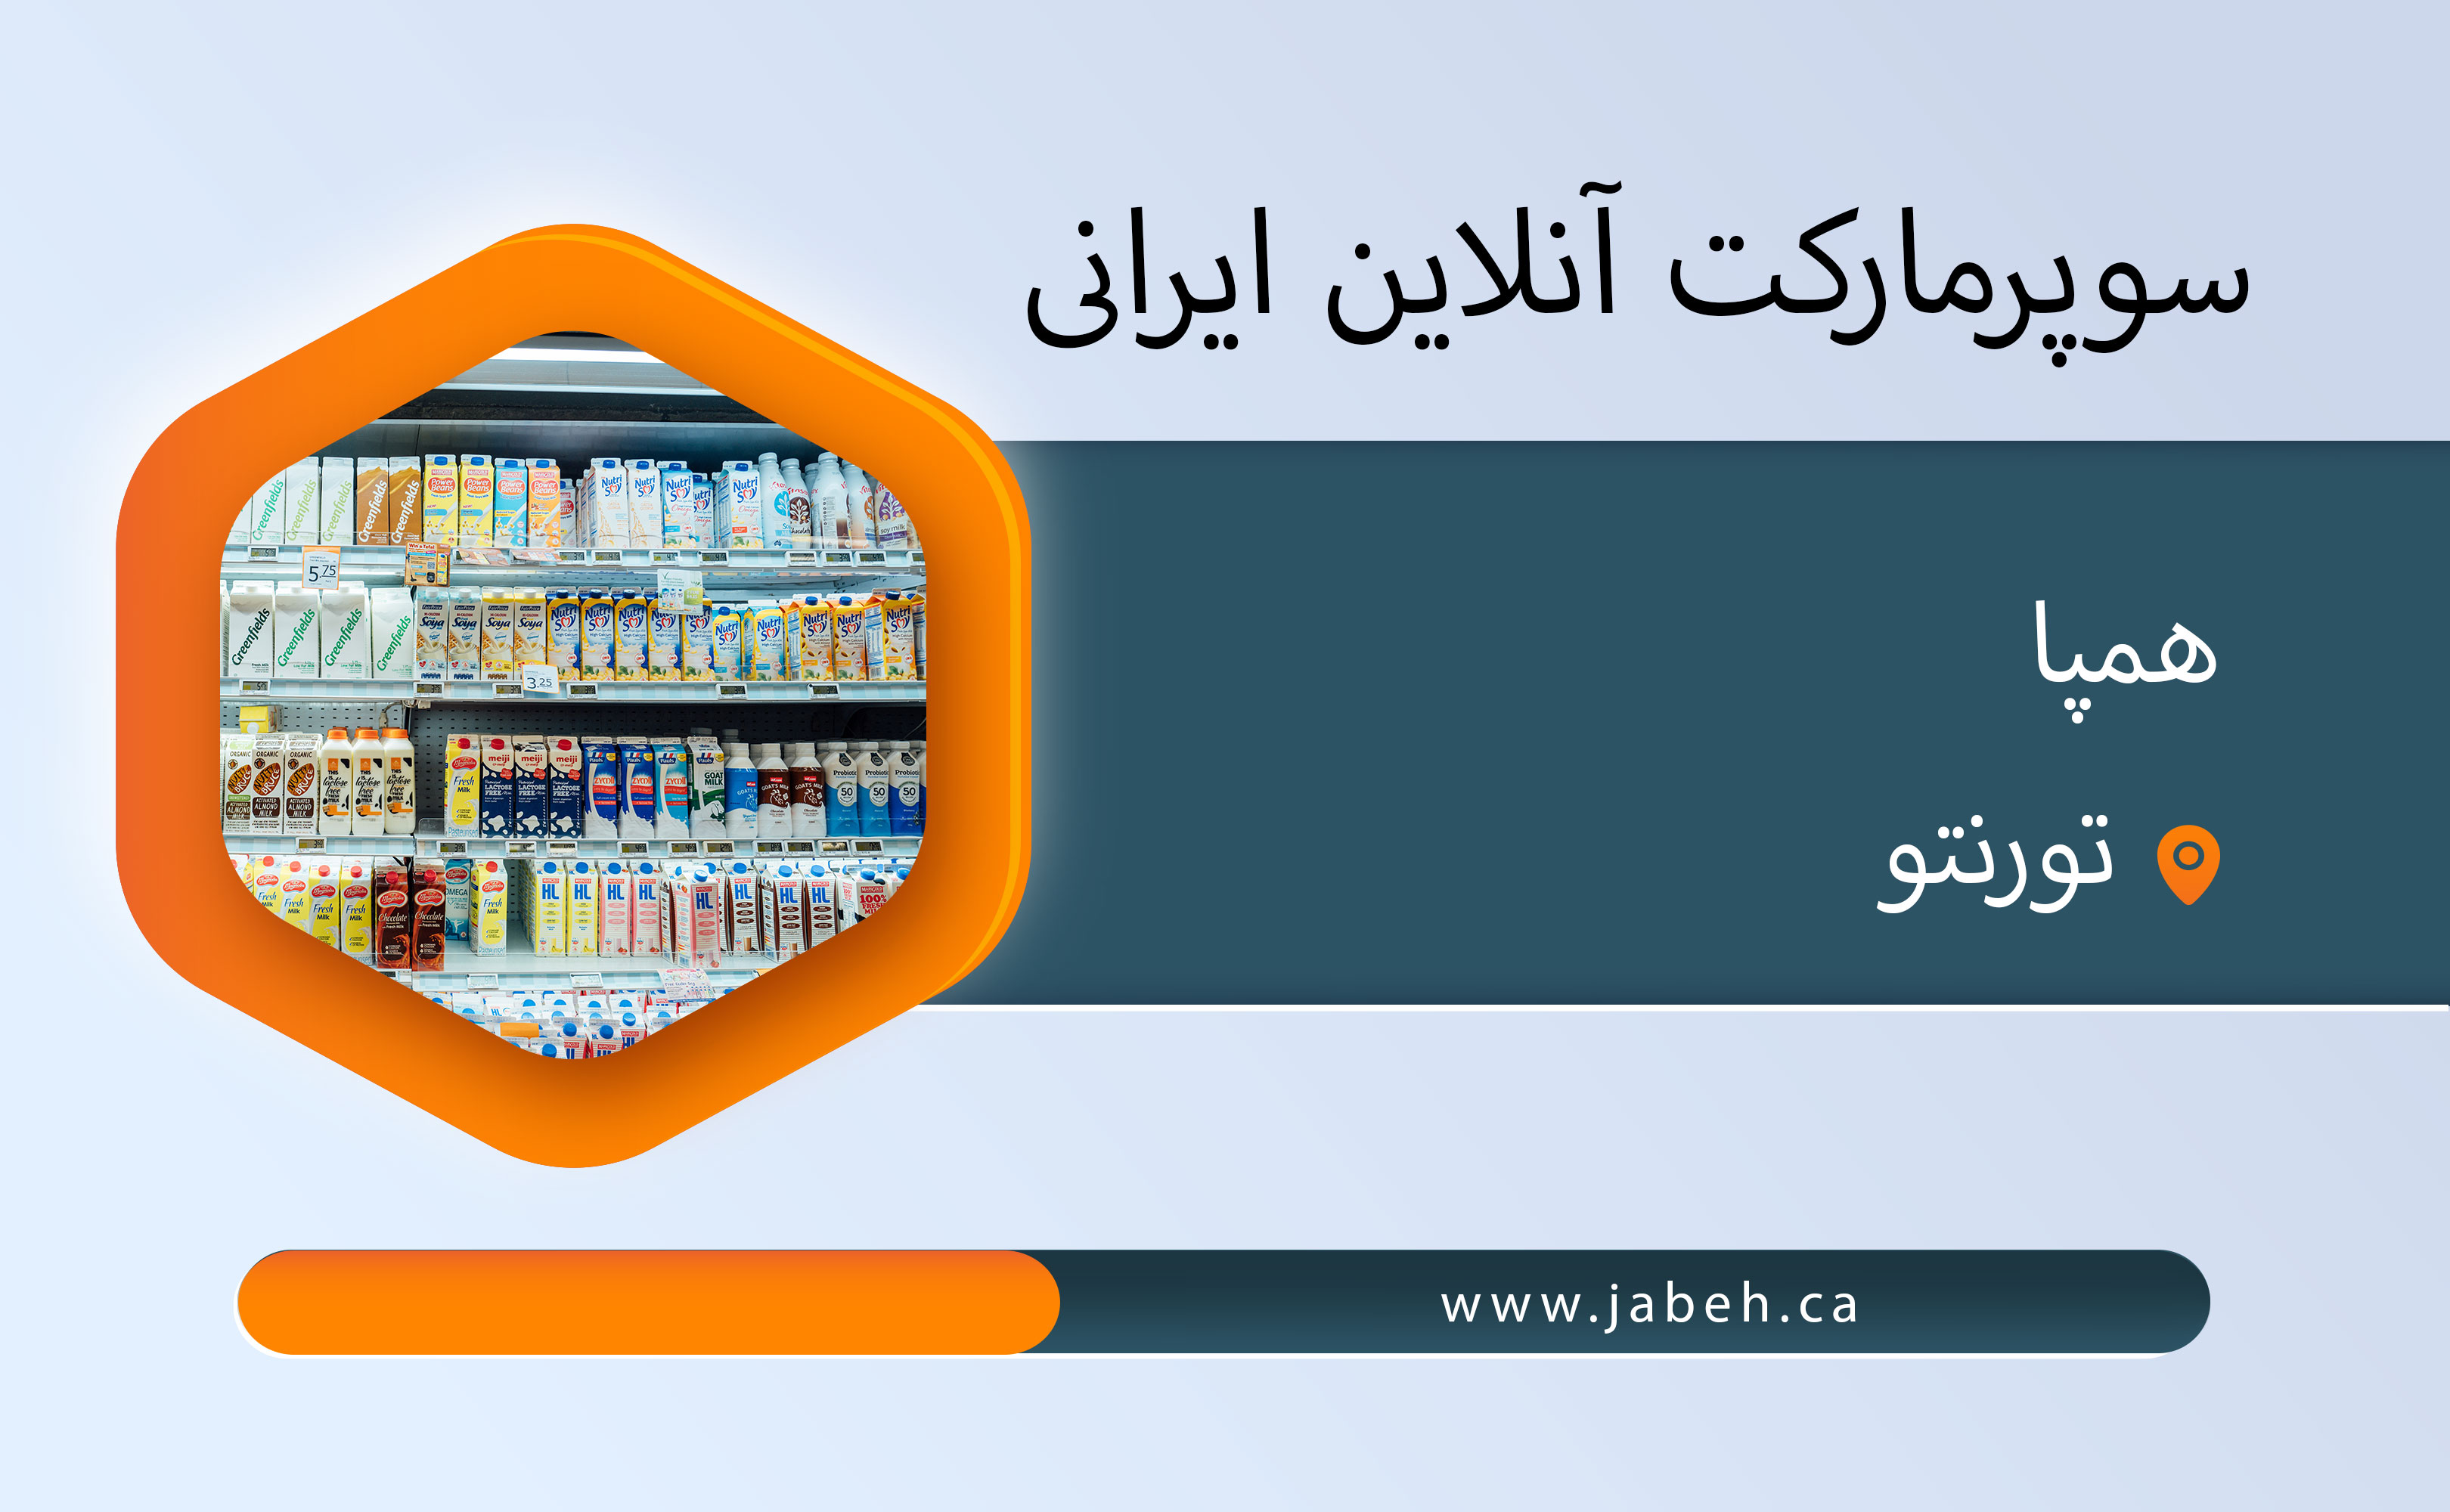 Hampa Iranian online supermarket in Toronto